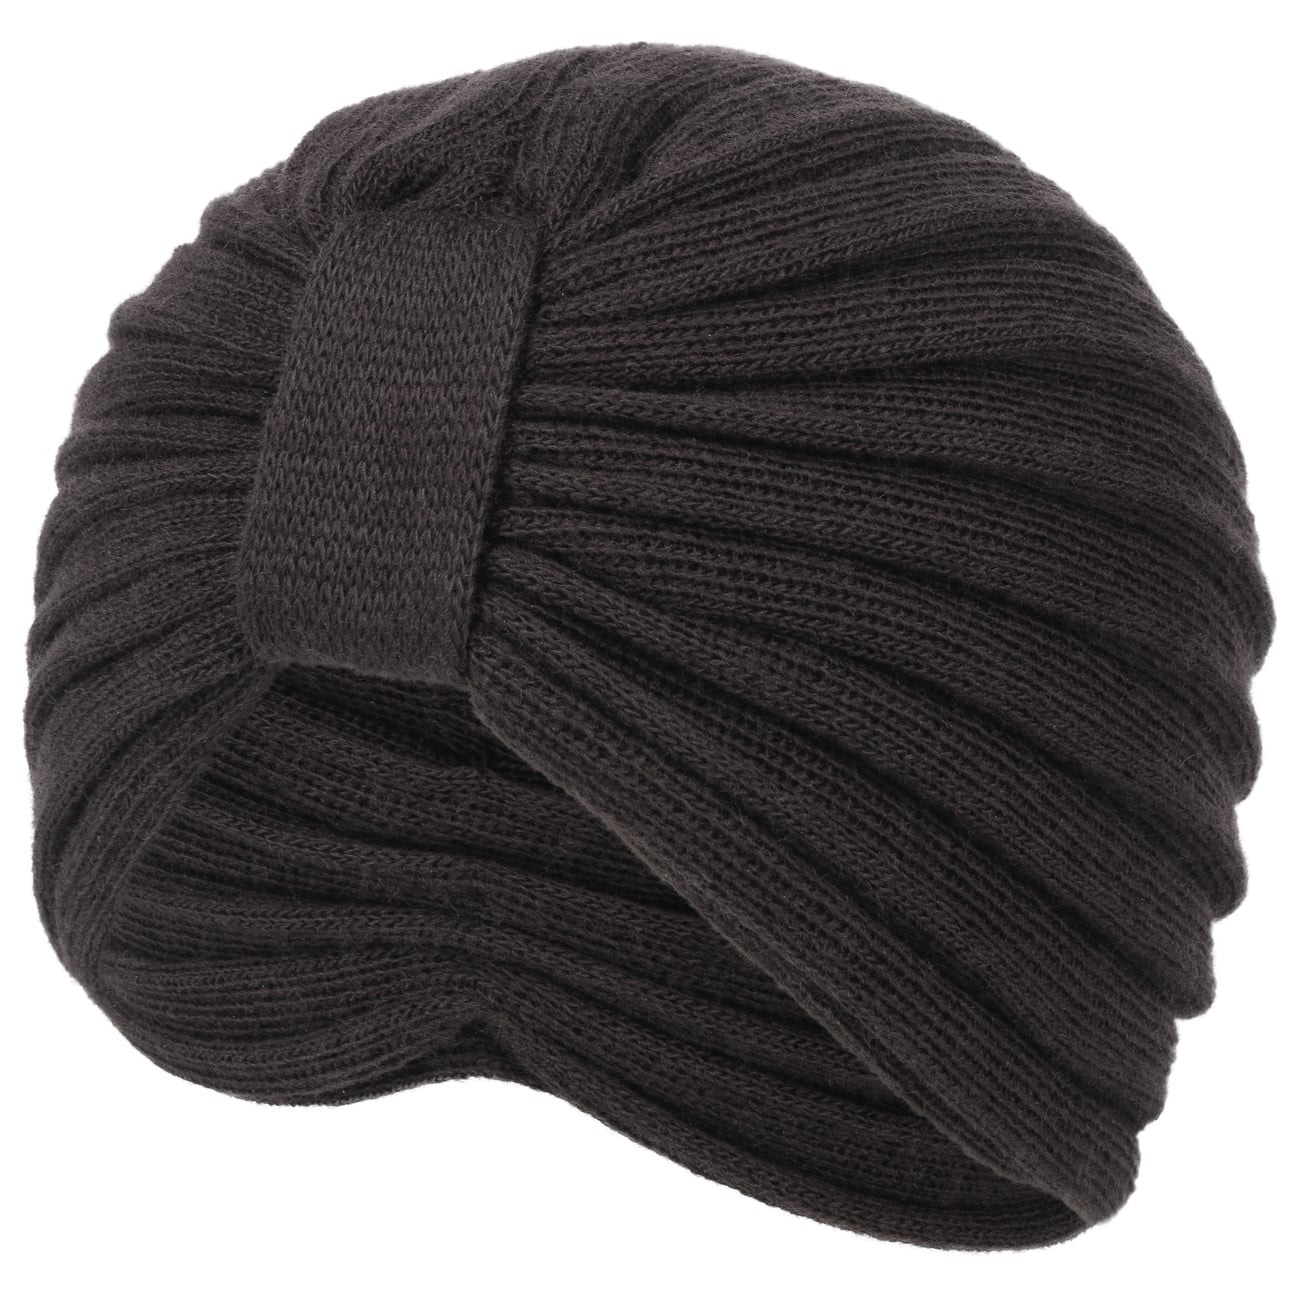 Giovanna Wool Turban by McBURN, EUR 29,95 --> Hats, caps & beanies shop ...